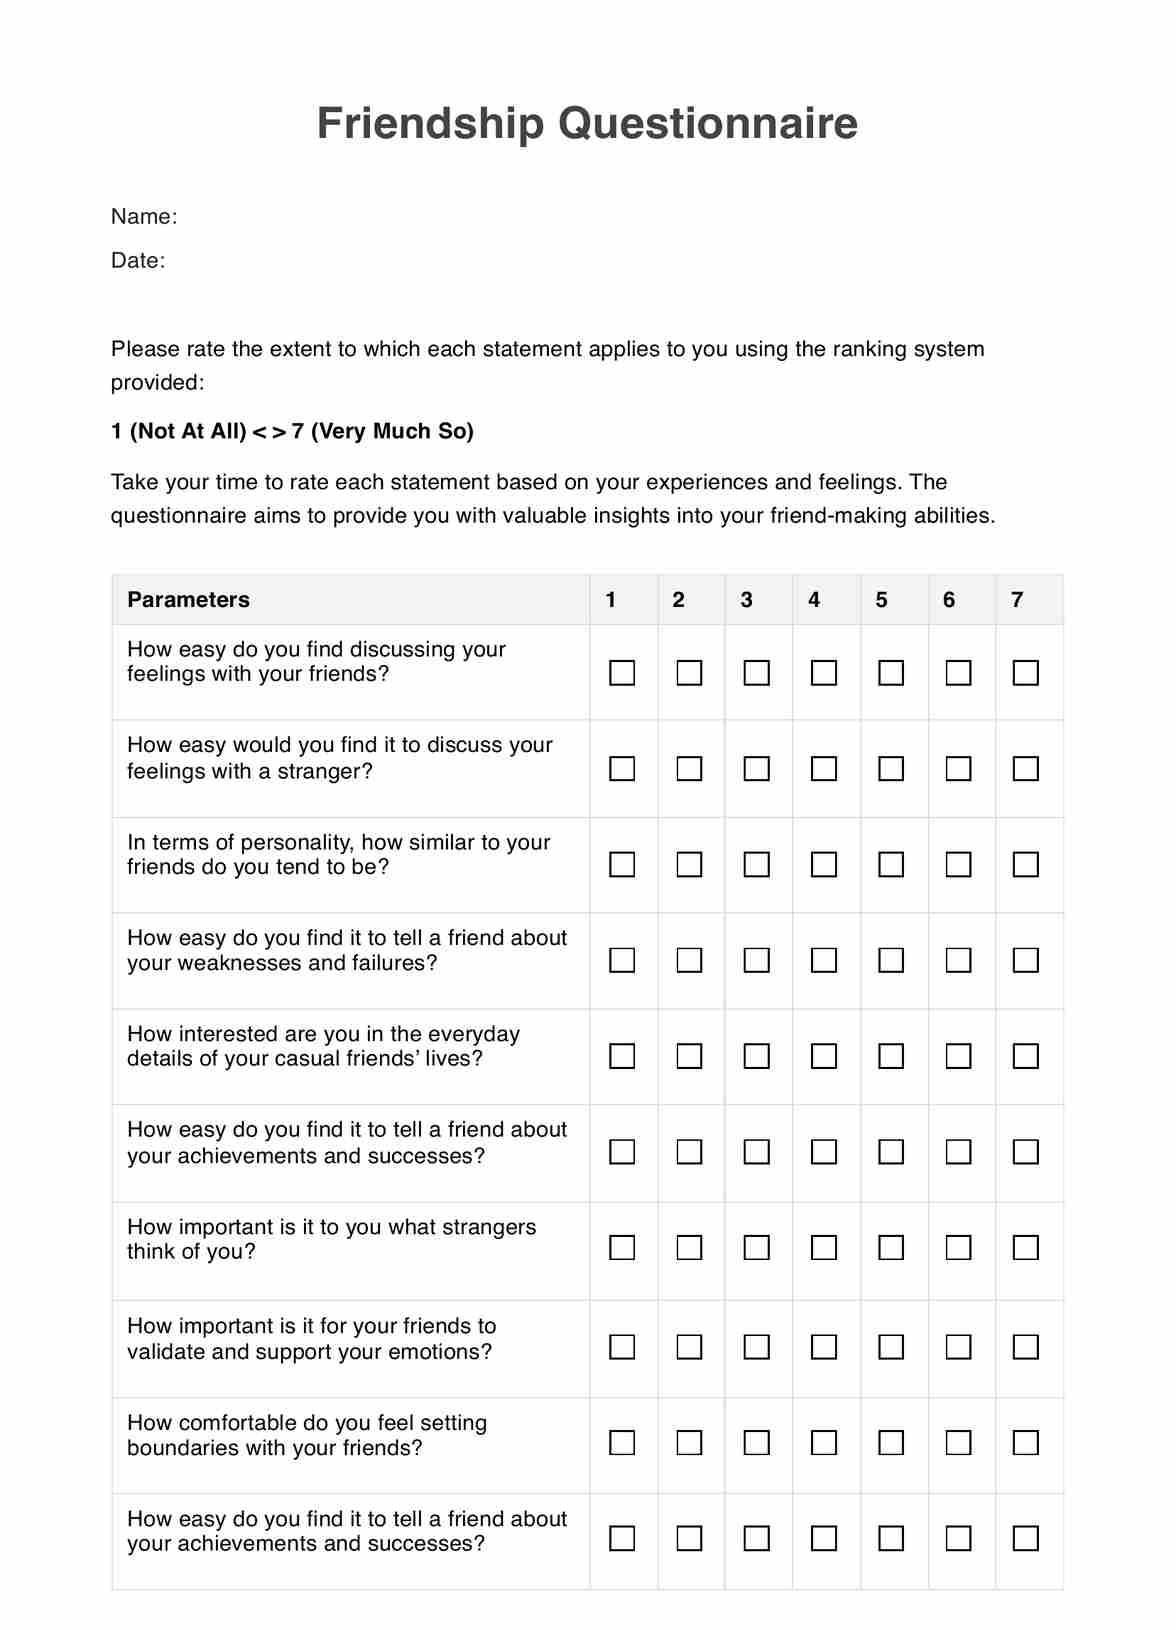 Friendship Questionnaire PDF Example